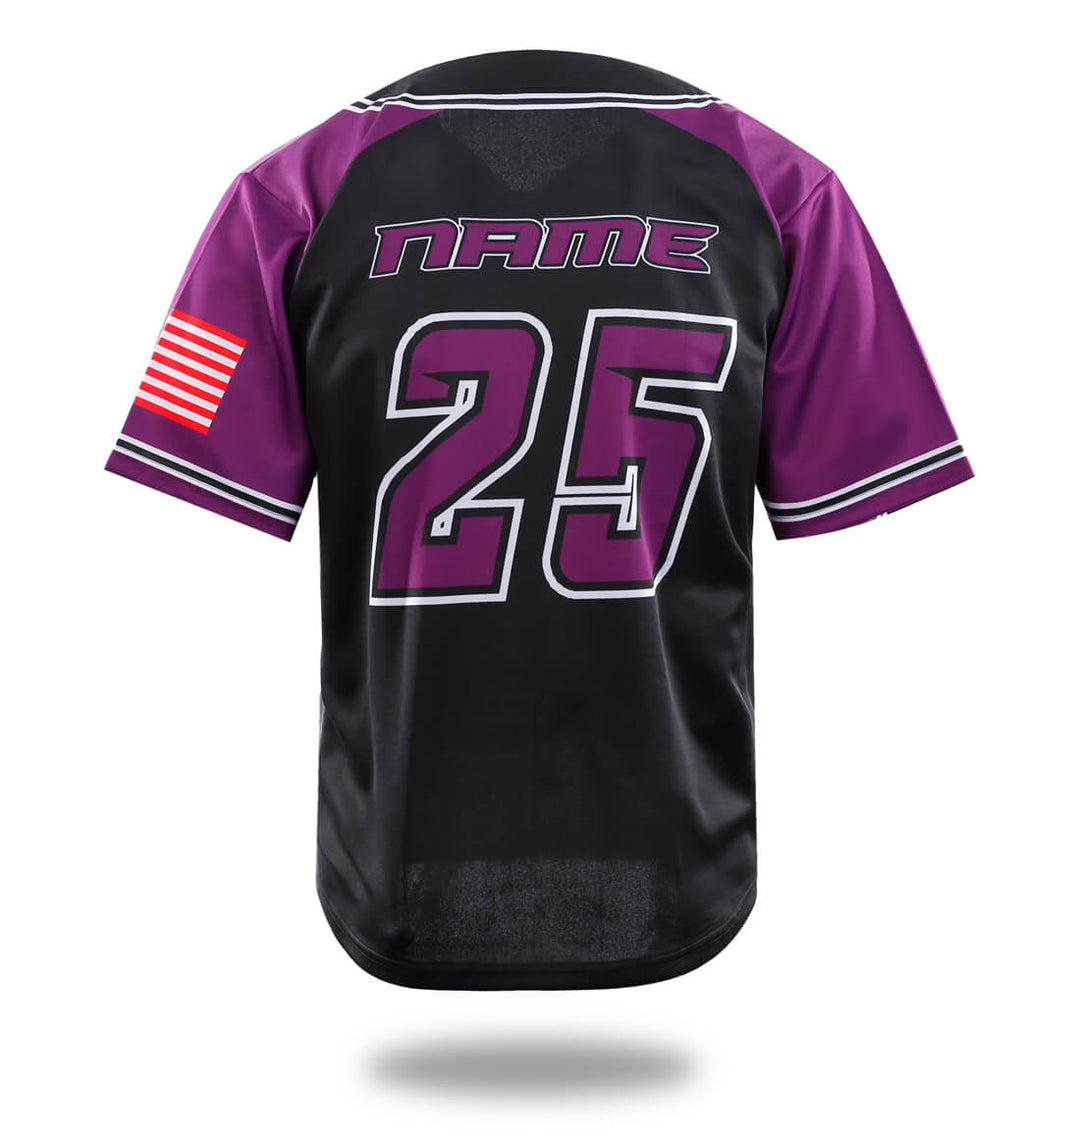 Vipers Black Purple Design Baseball Shirts-1